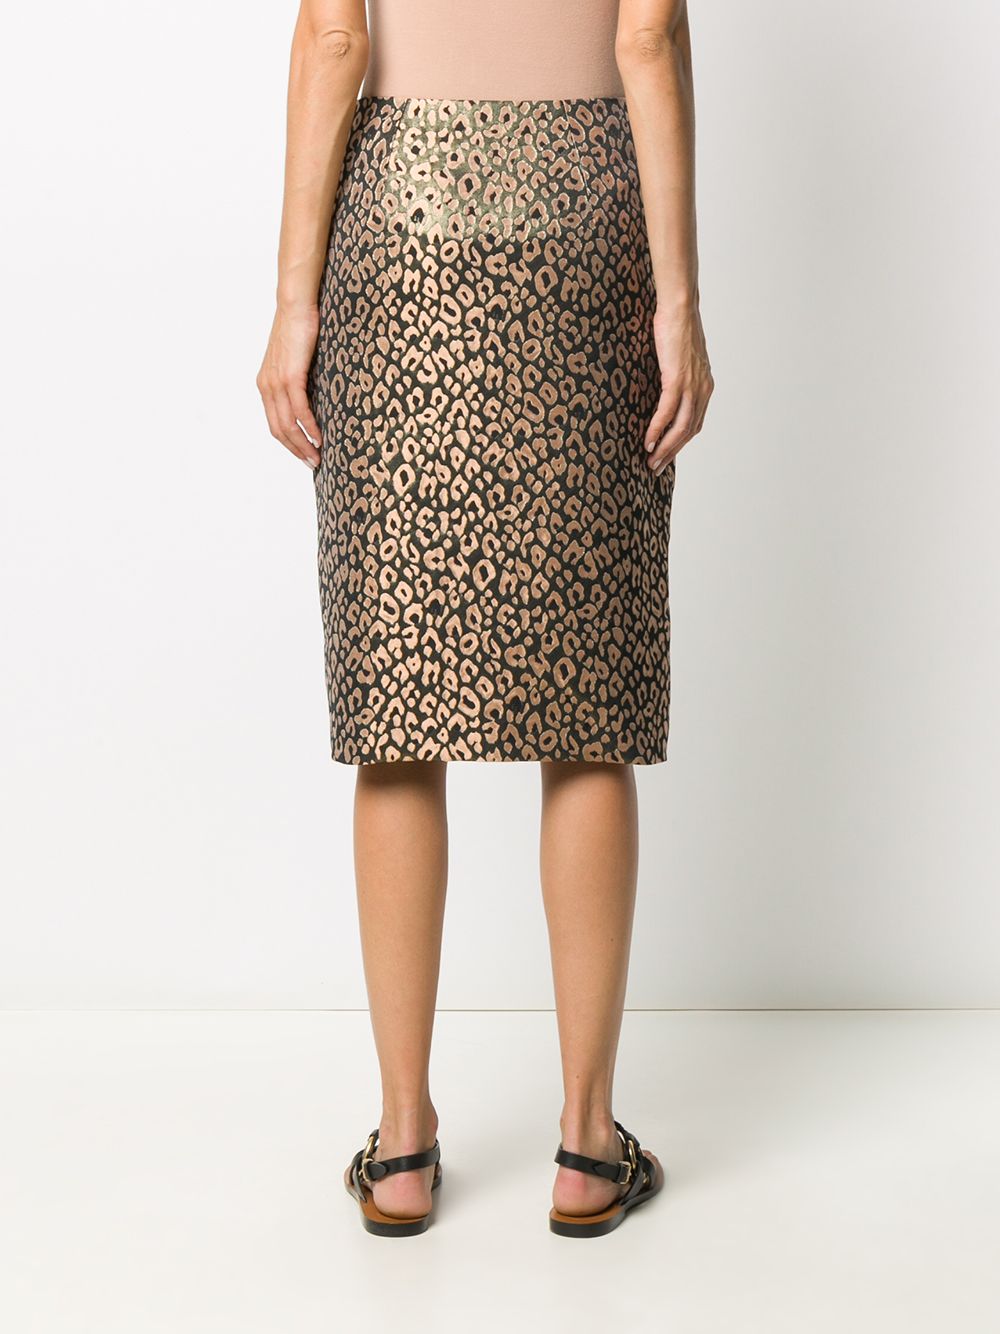 фото Dorothee schumacher юбка с леопардовым принтом